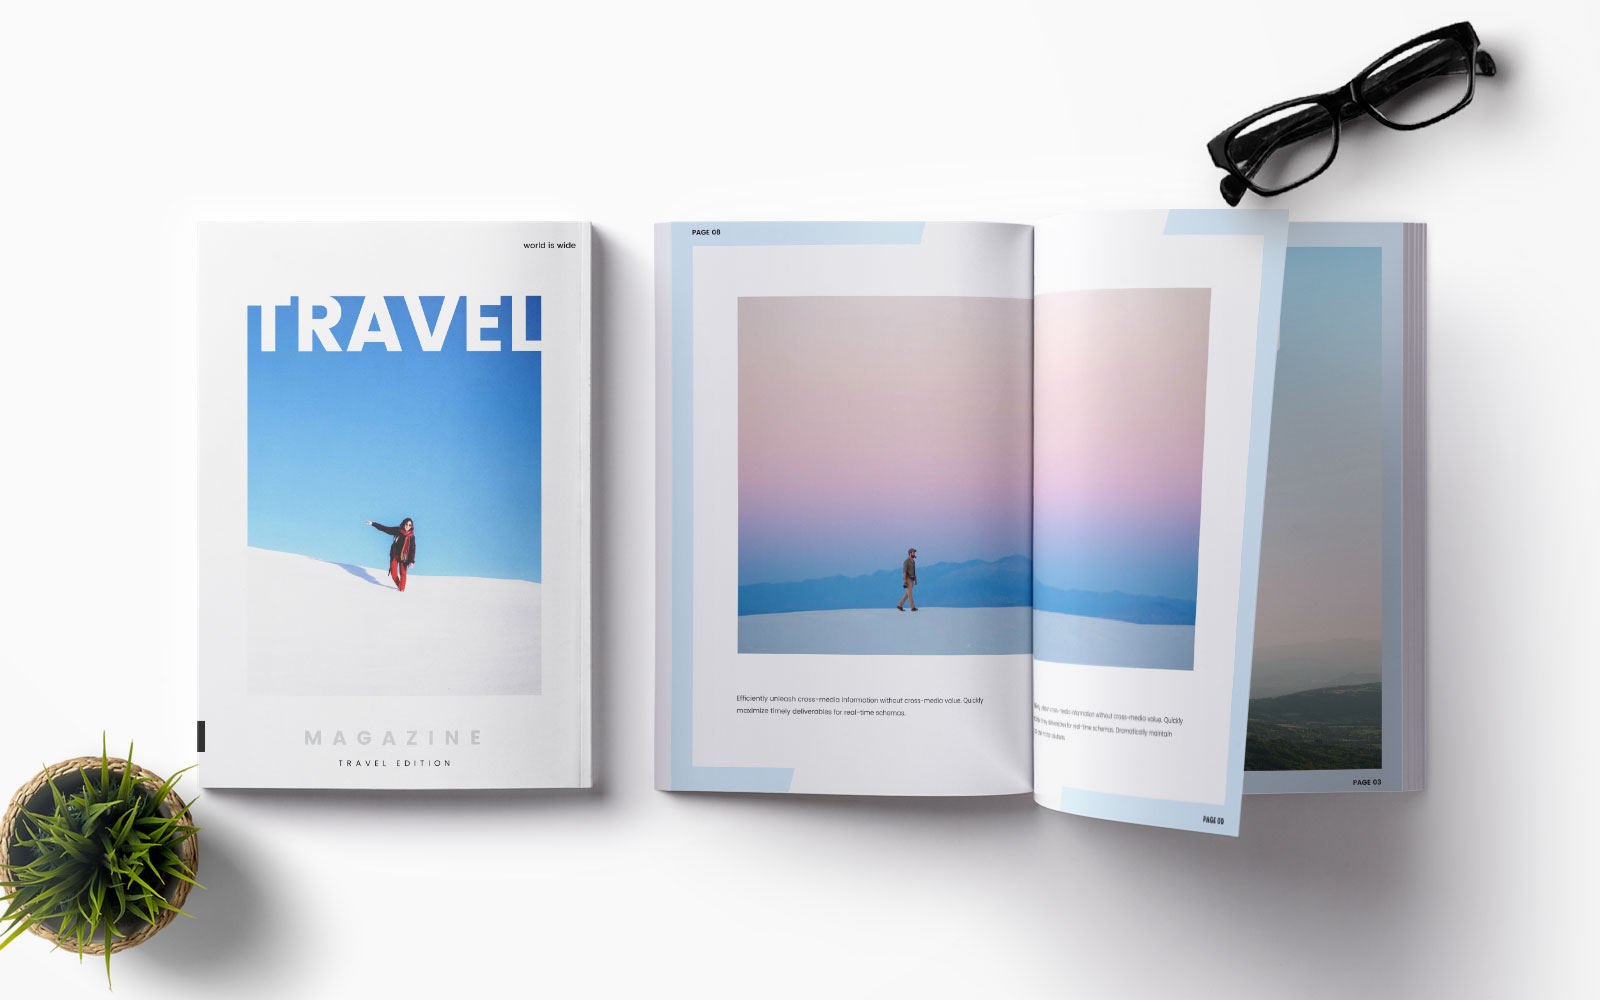 Travel Magazine - Corporate Identity Template